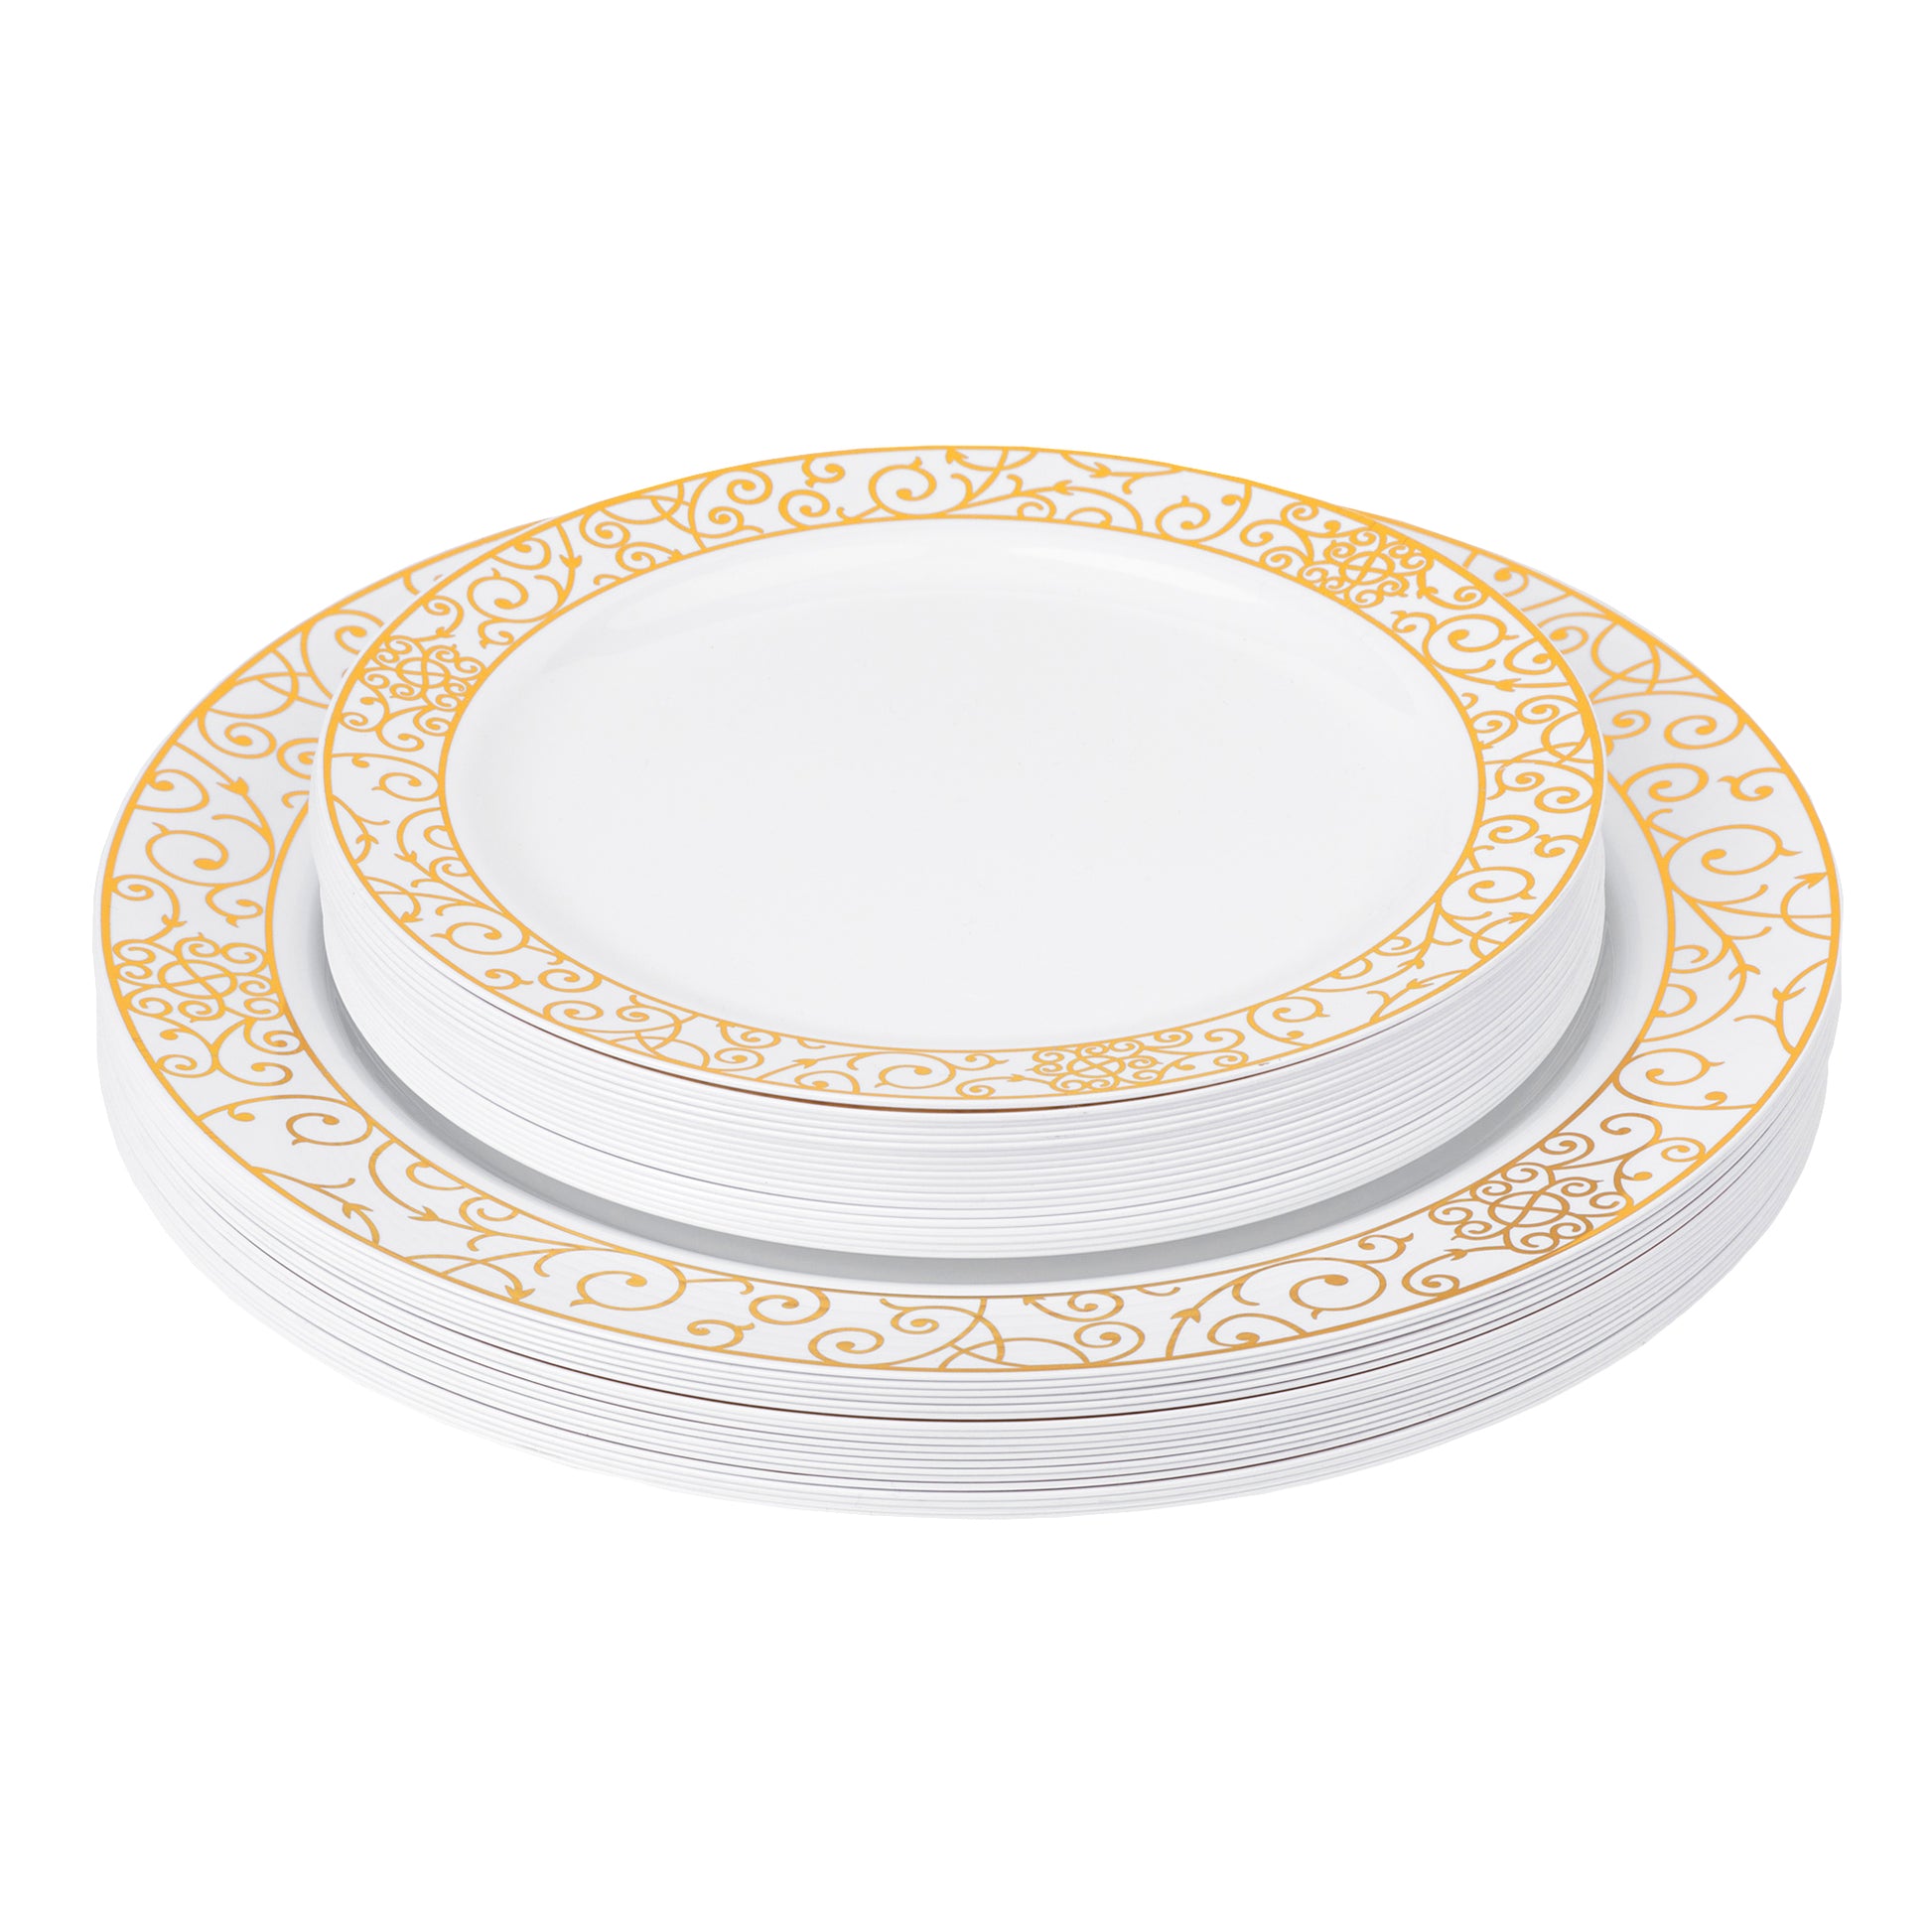 Venetian Disposable Plastic Plates 40 pcs Combo Pack - White Gold-Trimmed